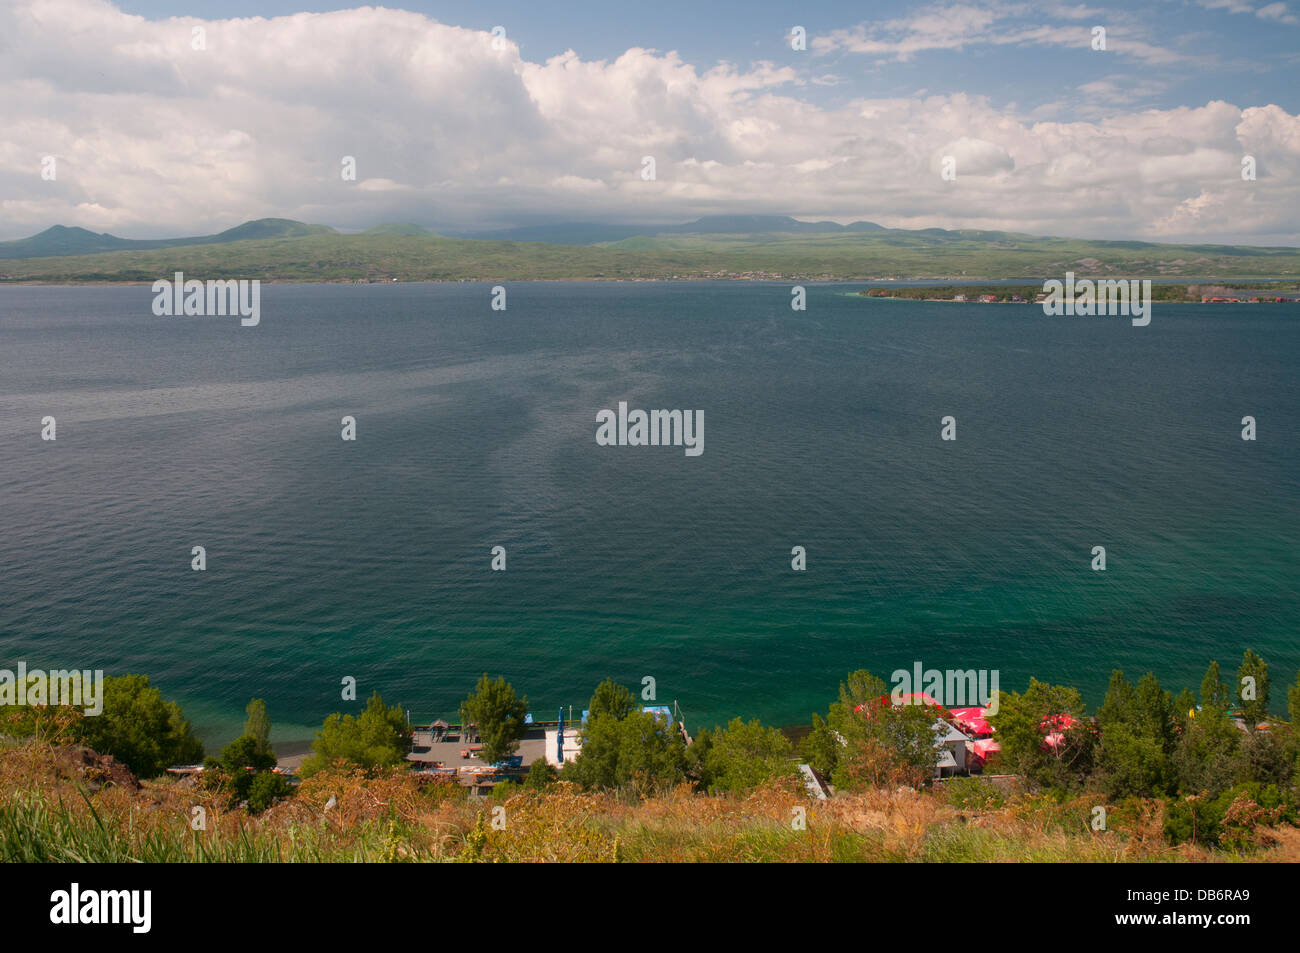 El lago Sevan, Armenia, un 30 x 80 km lago alpino a 1900 metros de altitud Foto de stock